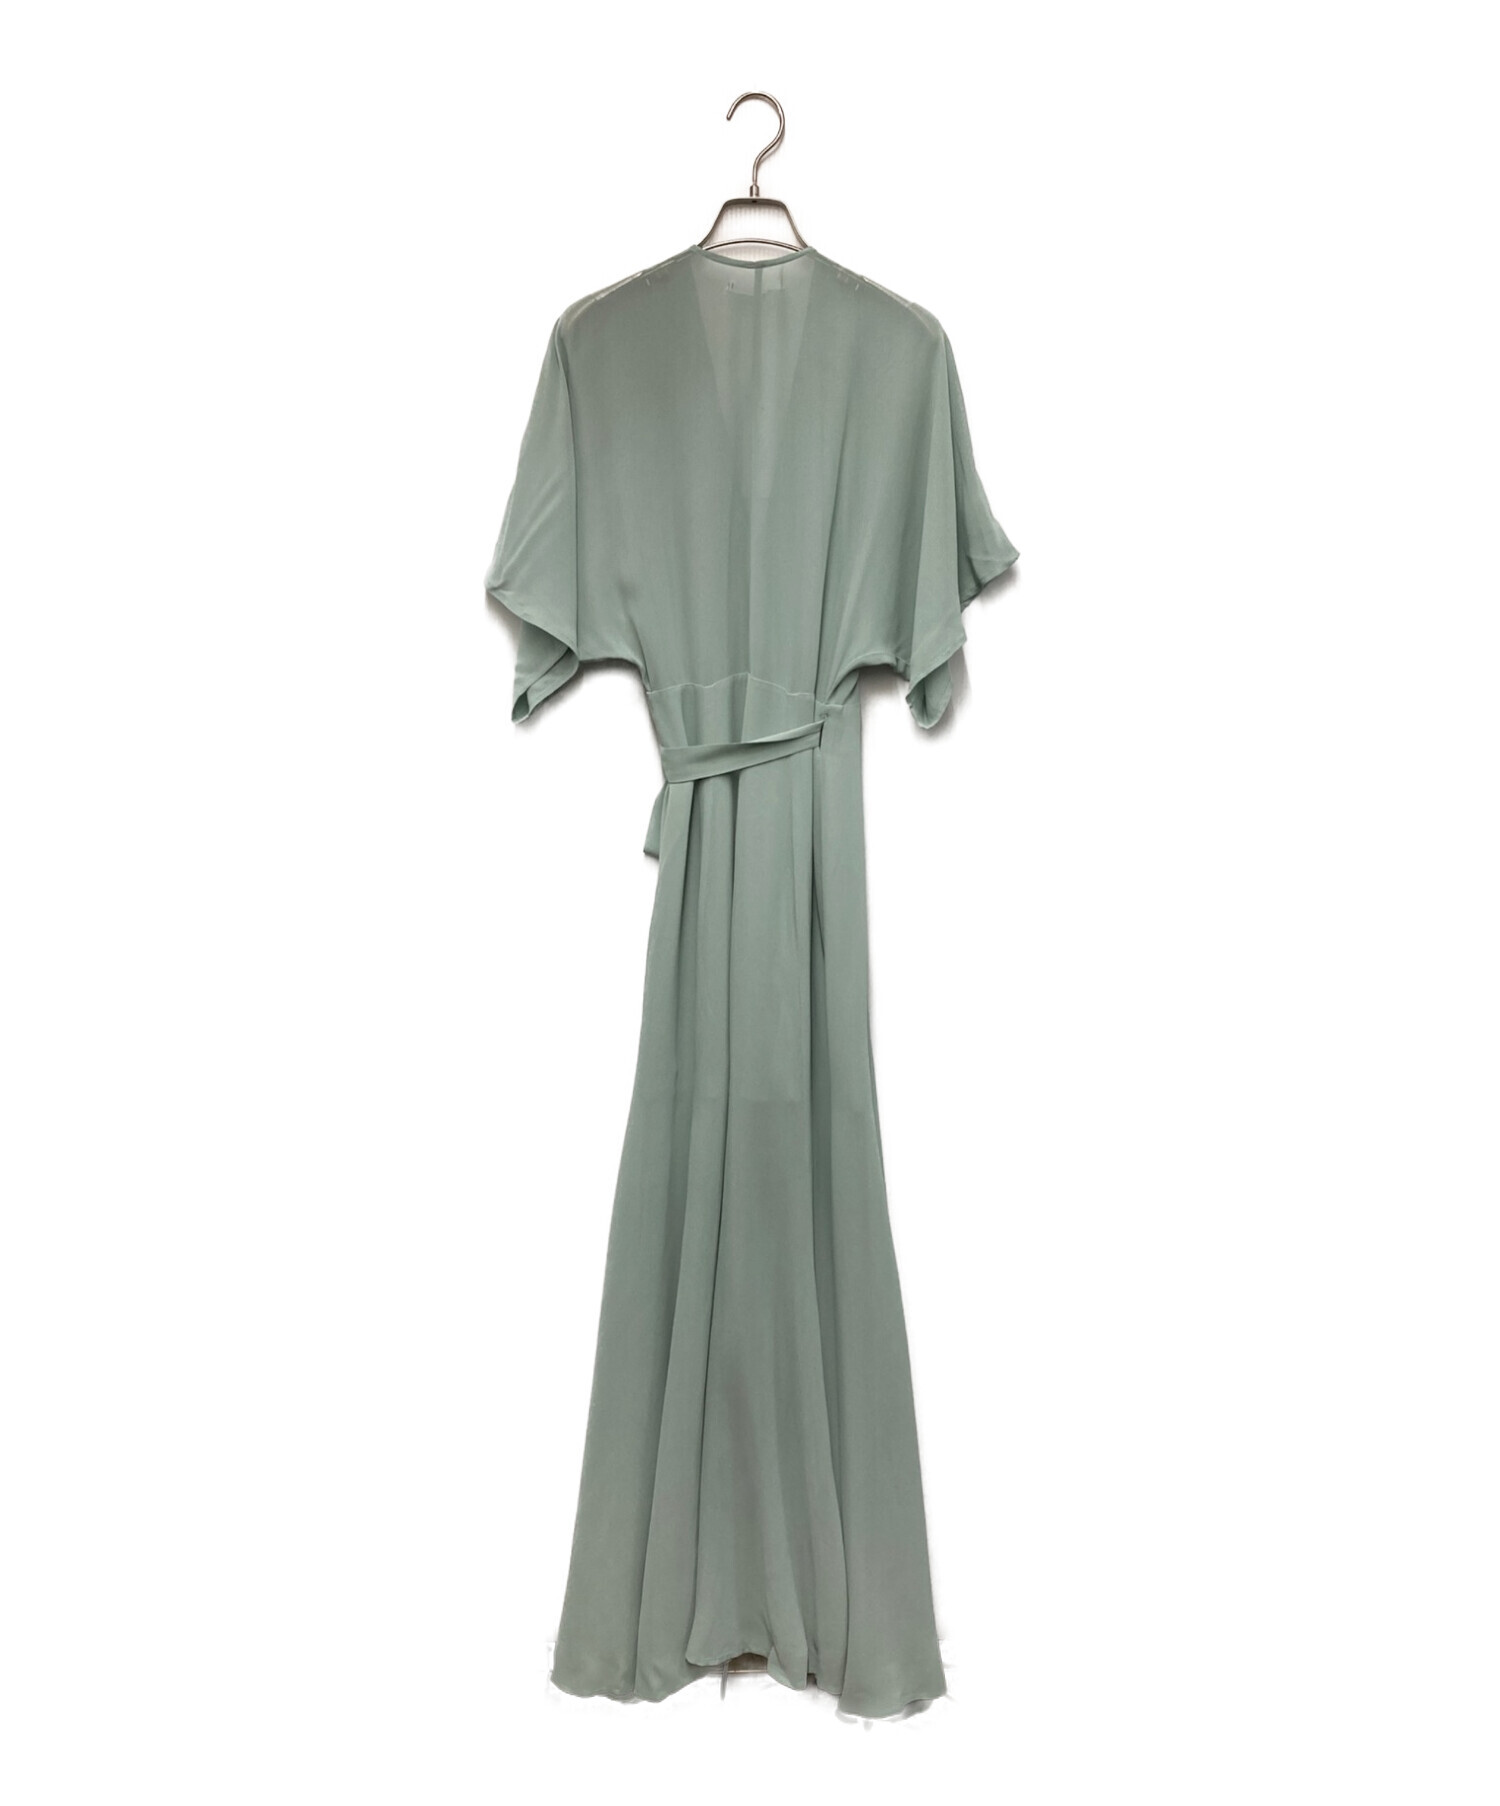 Reformation (リフォーメーション) Winslow Dress ブルー サイズ:XS 未使用品